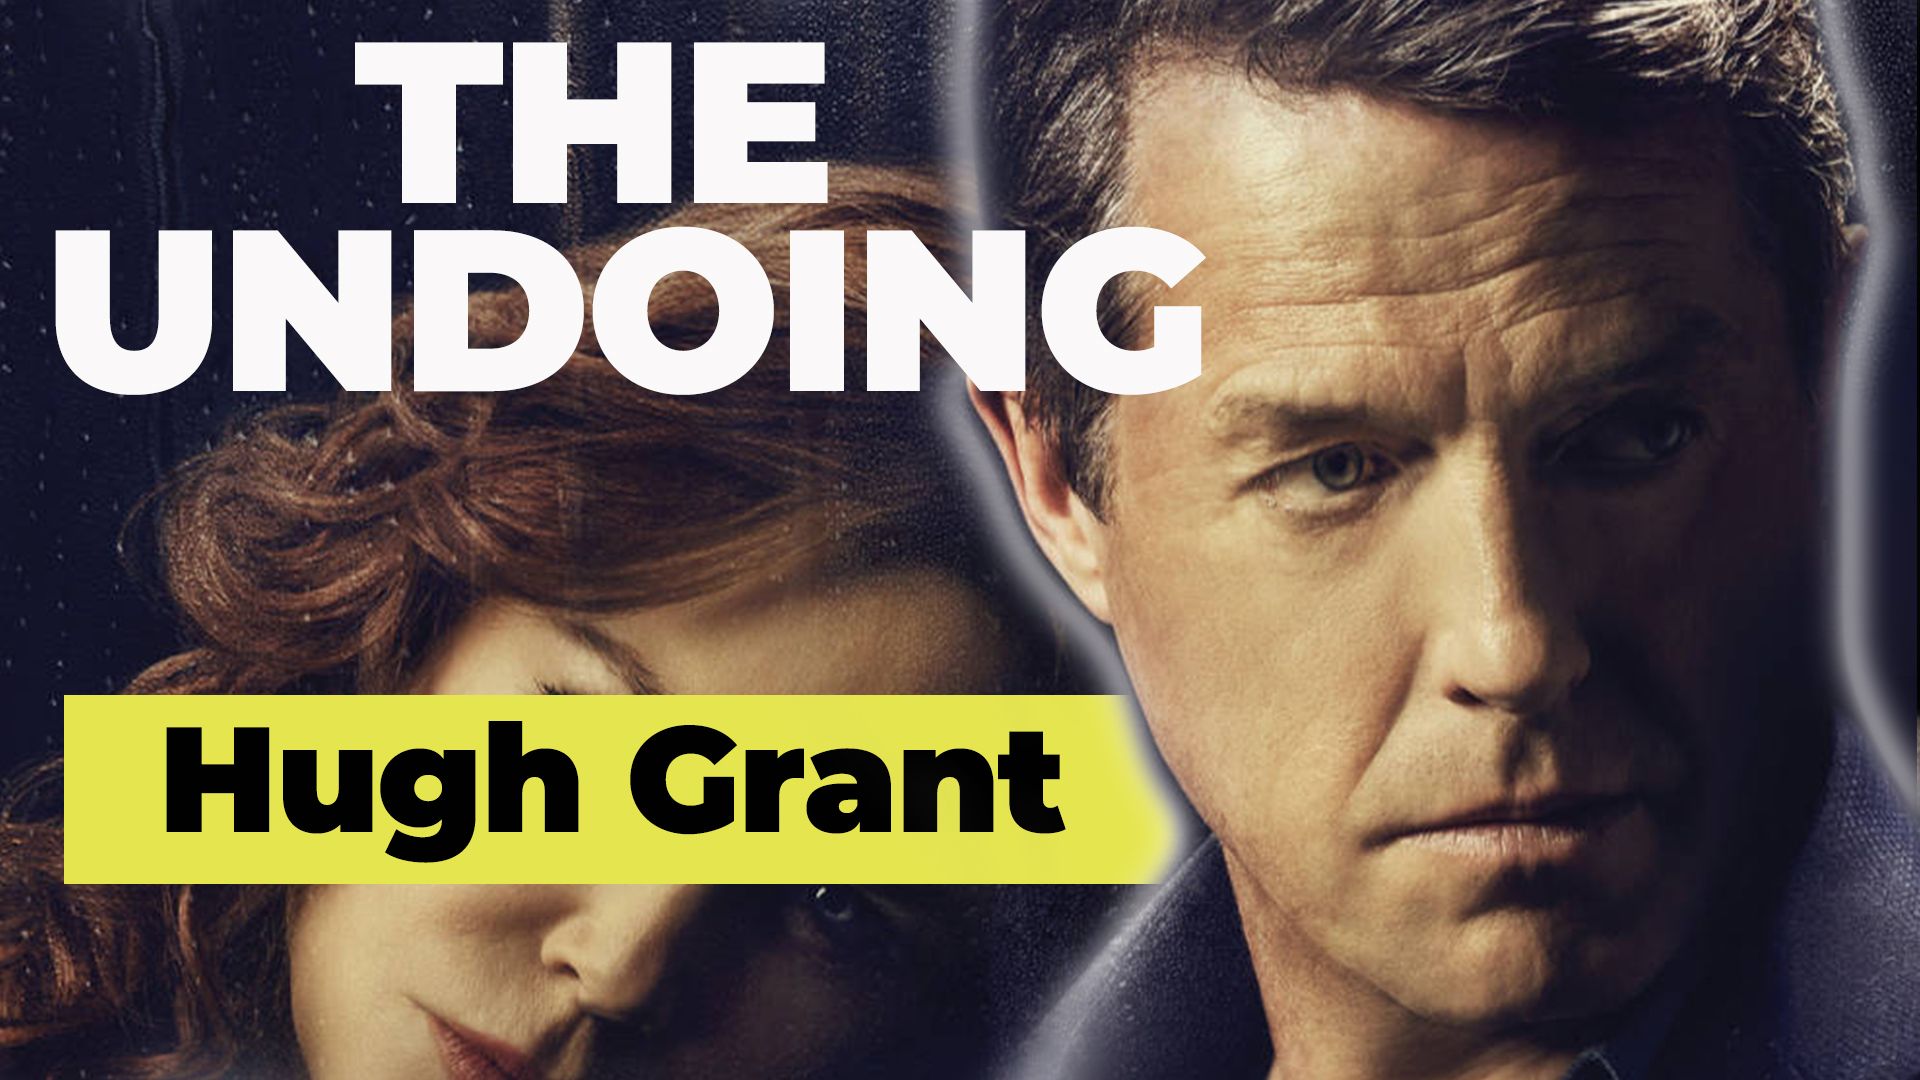 The Undoing season 2 idea addressed by Hugh Grant